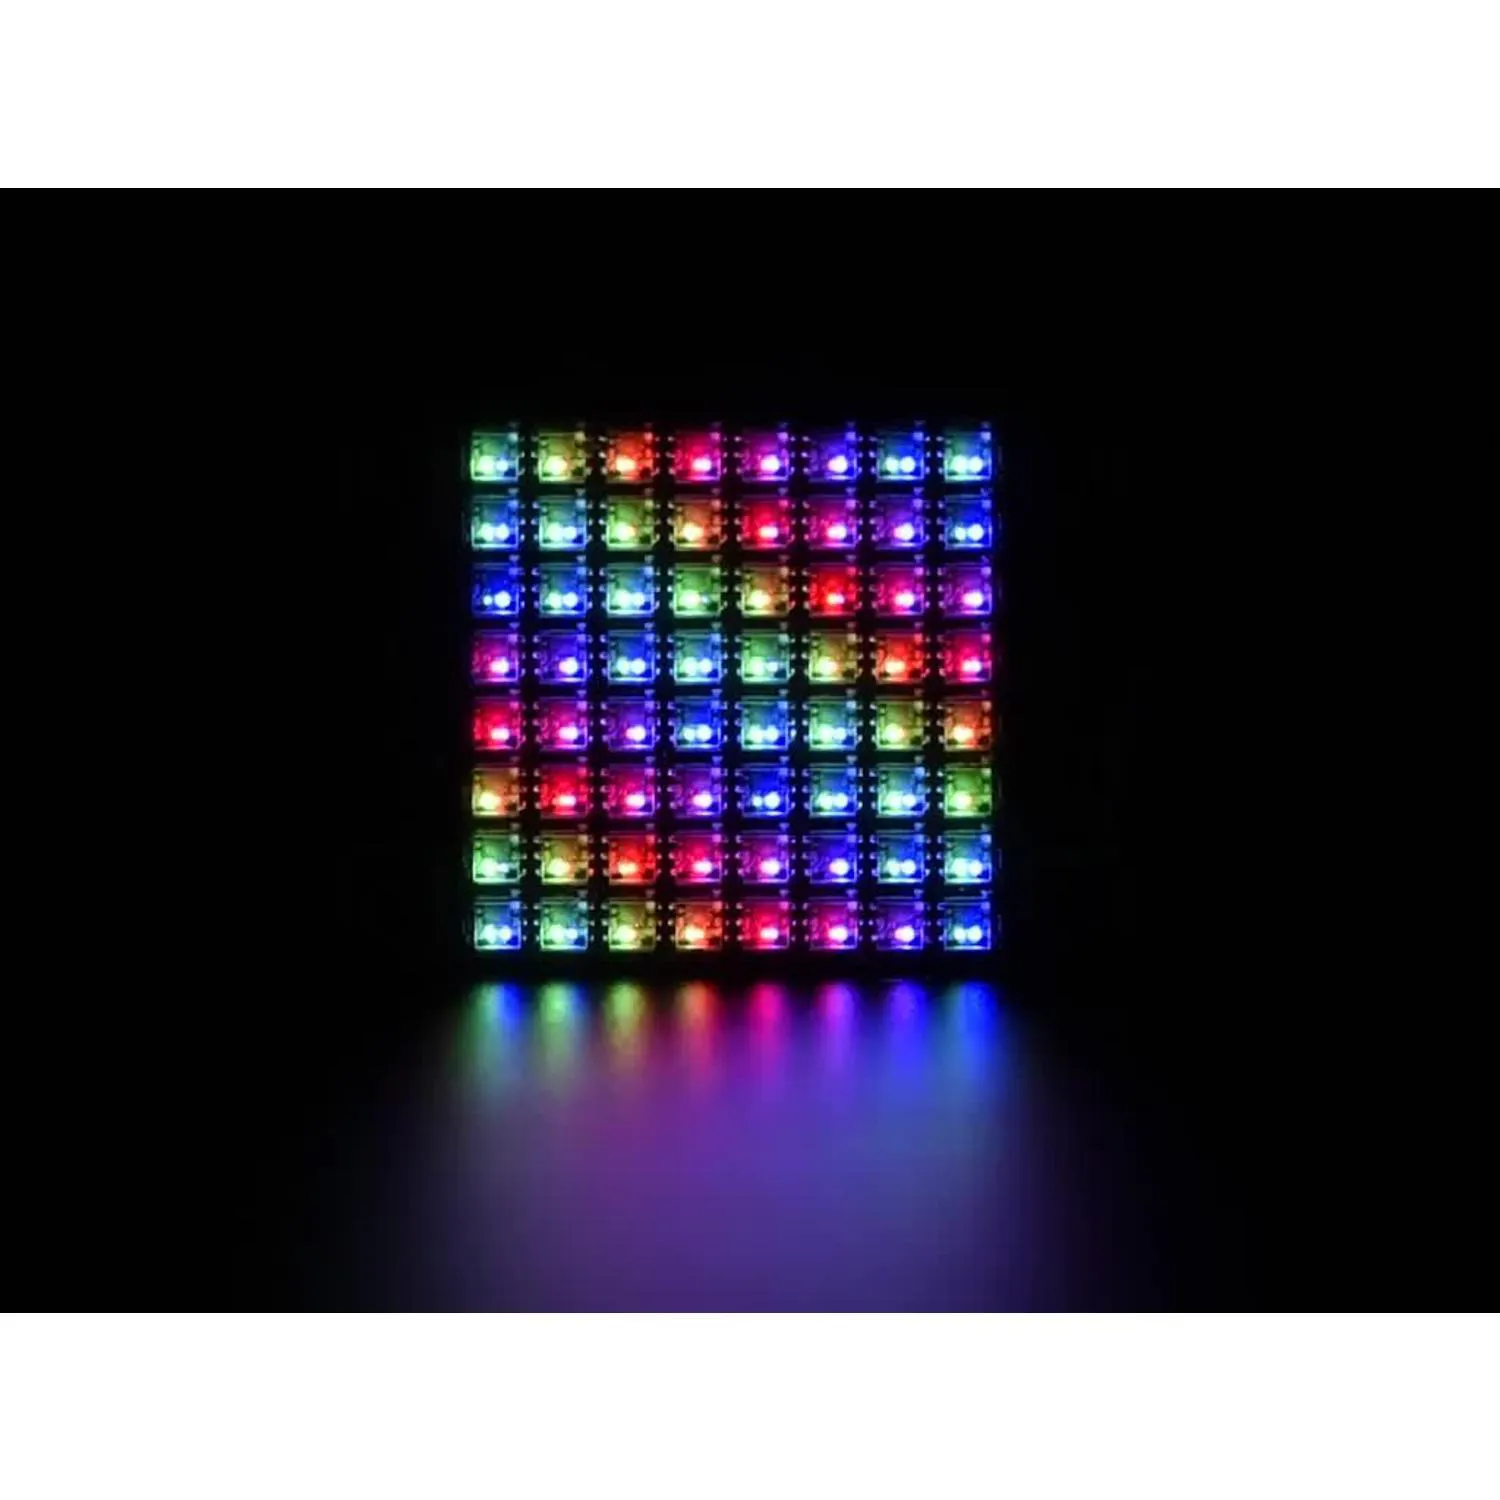 Photo of Adafruit DotStar High Density 8x8 Grid - 64 RGB LED Pixel Matrix